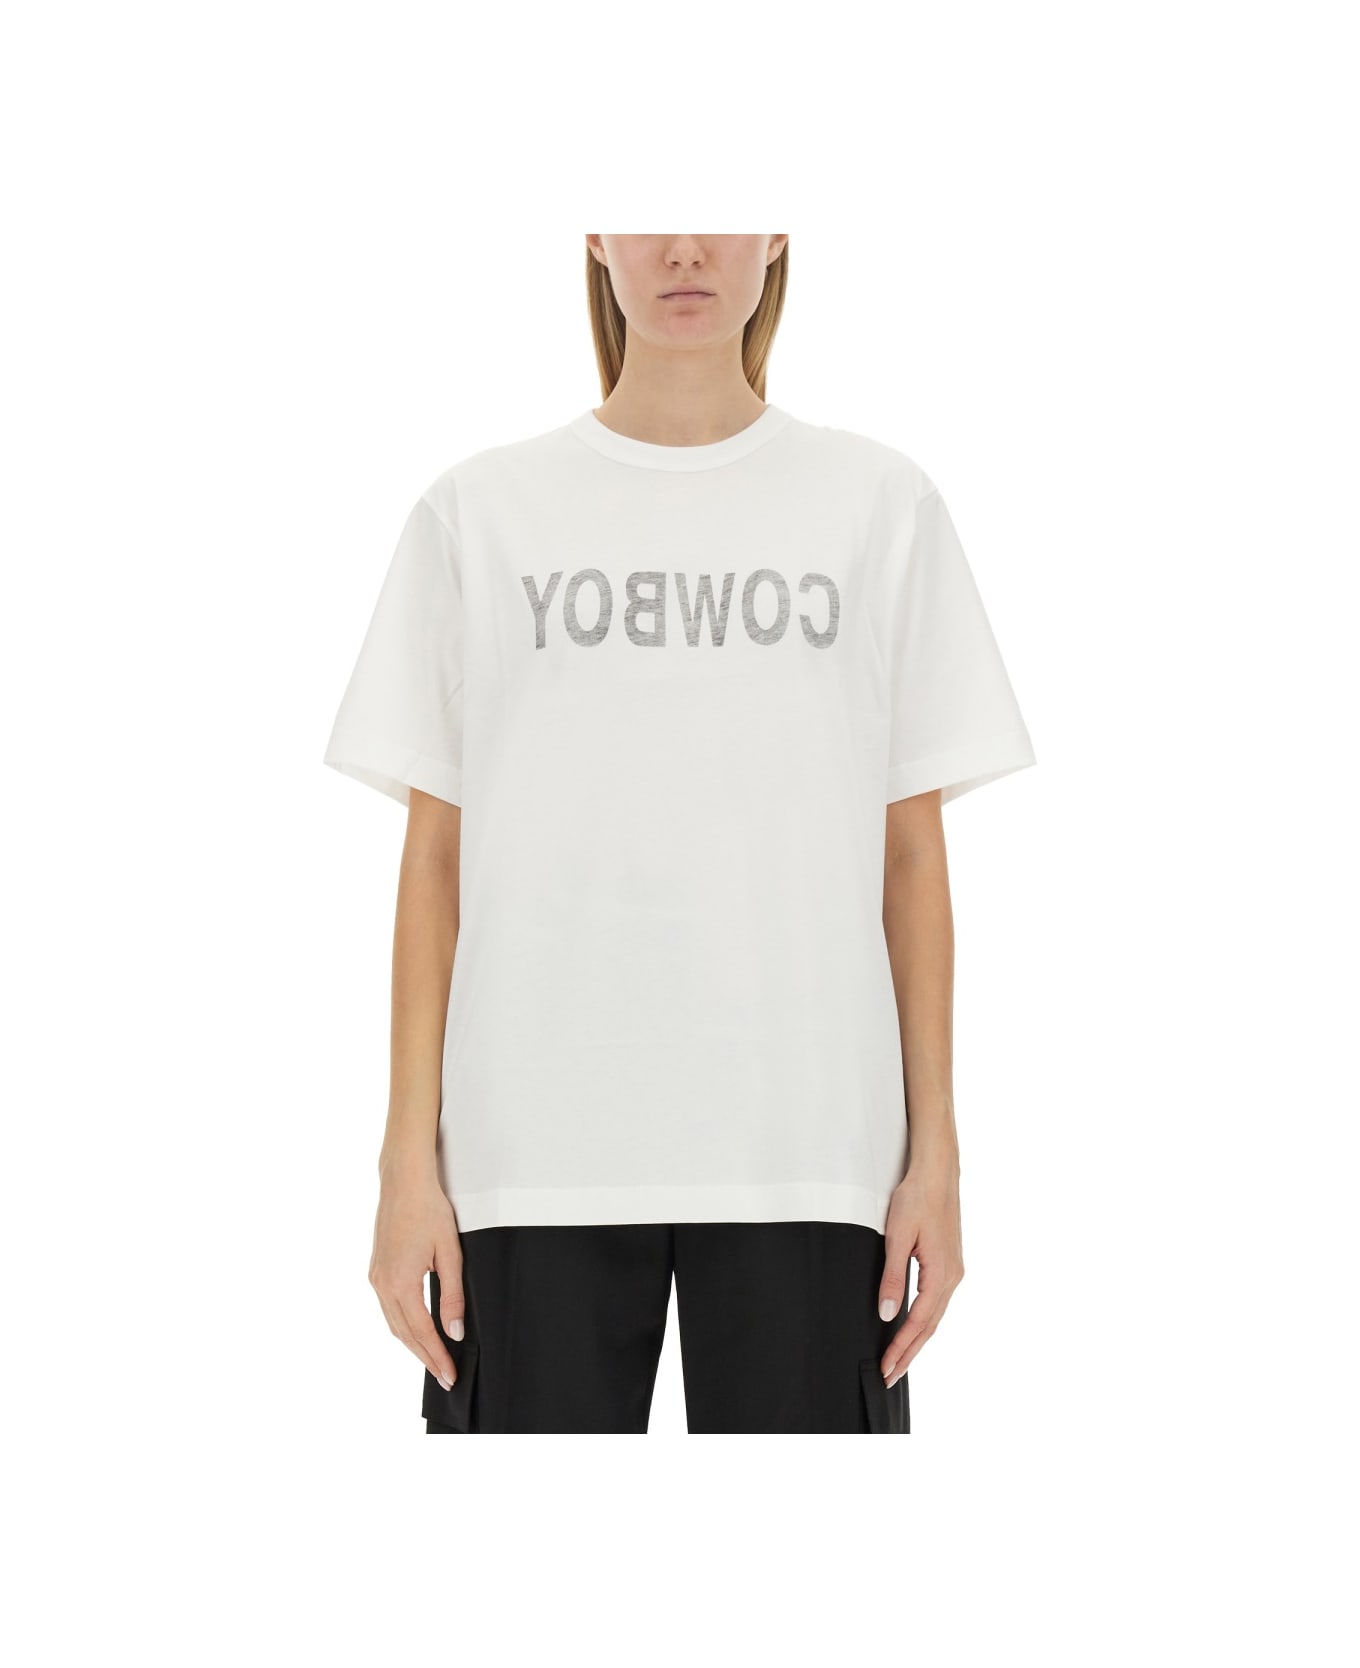 Helmut Lang Cowboy T-shirt - WHITE